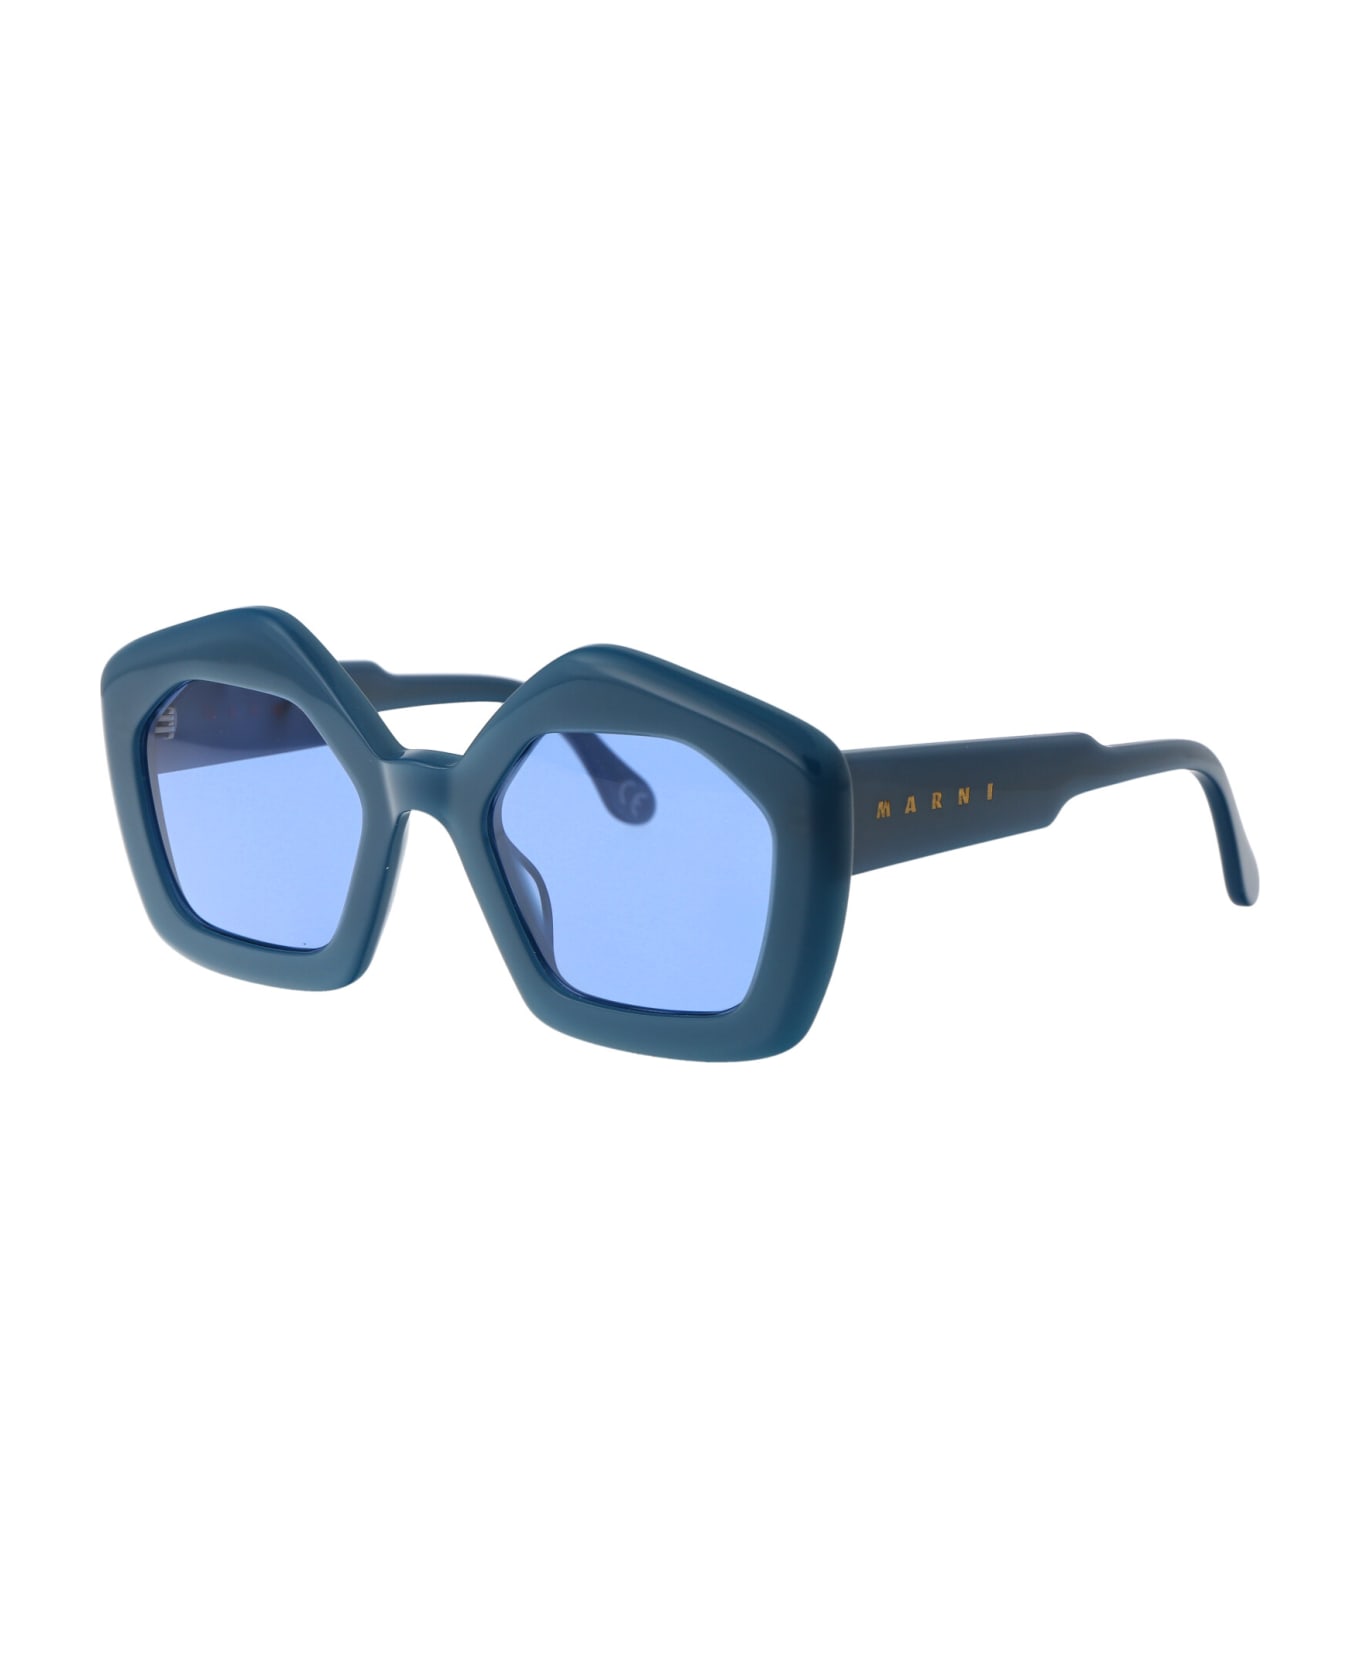 Marni Eyewear Laughing Waters Sunglasses - BLUE